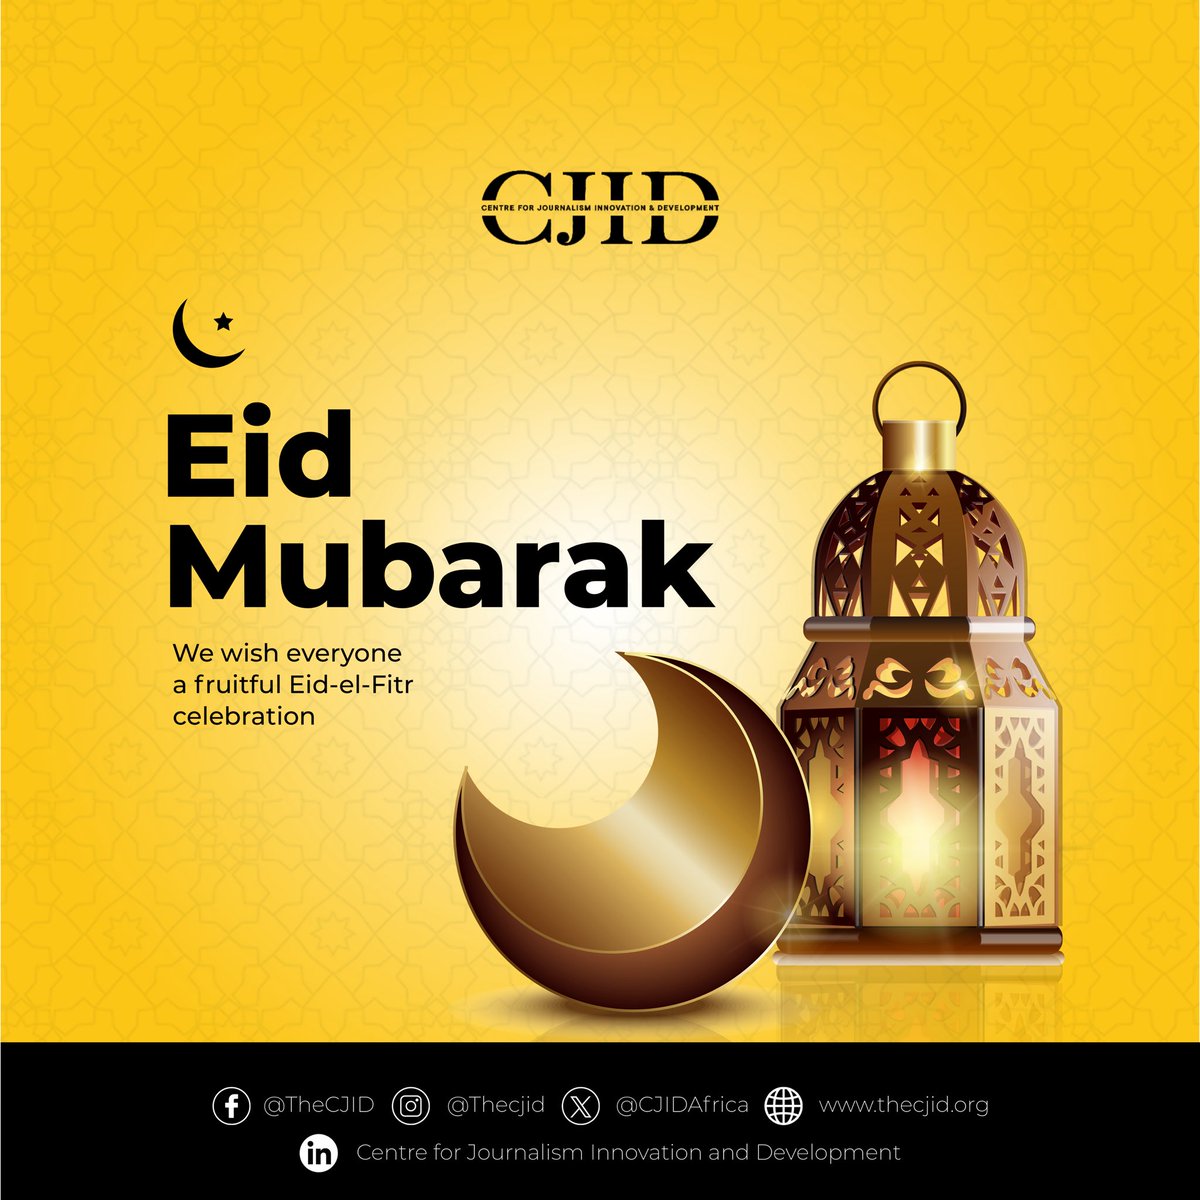 Eid Mubarak 🌙 from all of us at the Centre to everyone celebrating! Wishing you a fruitful and joyous celebration. #EidAlFitr